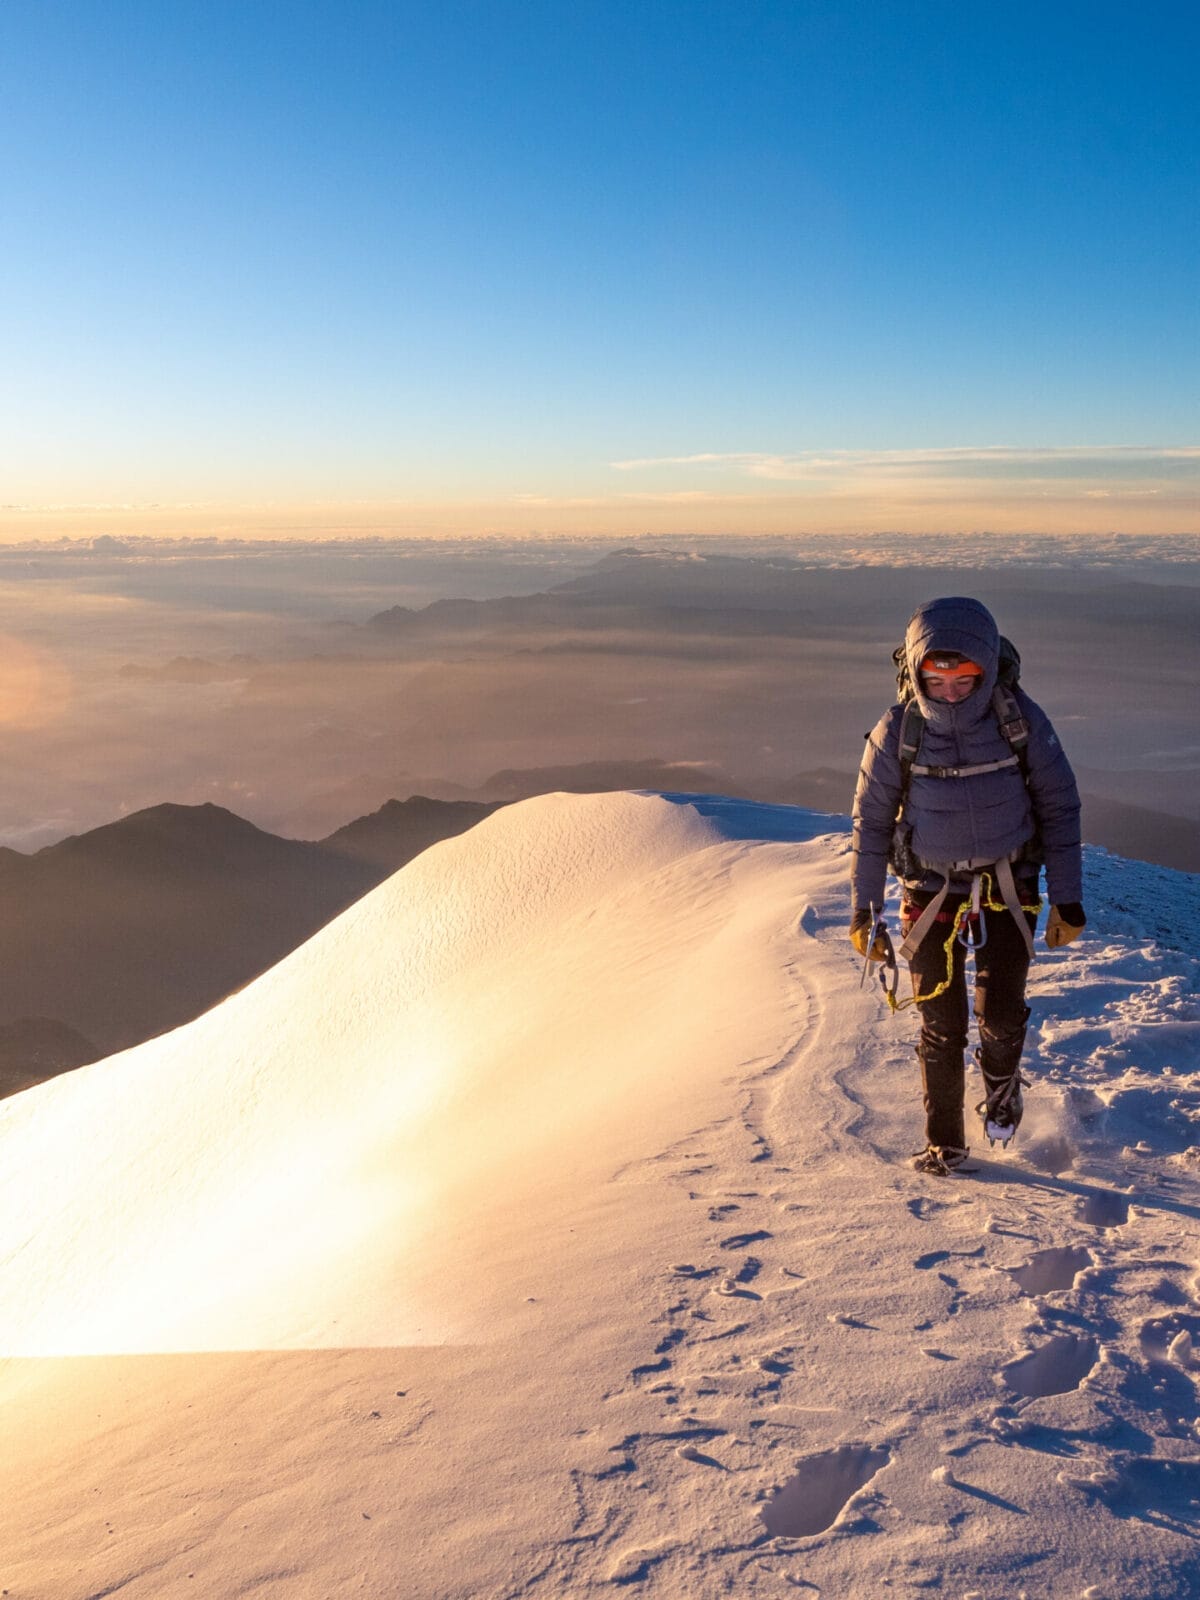 Pico de Orizaba climbing guide: summiting Mexico's highest peak